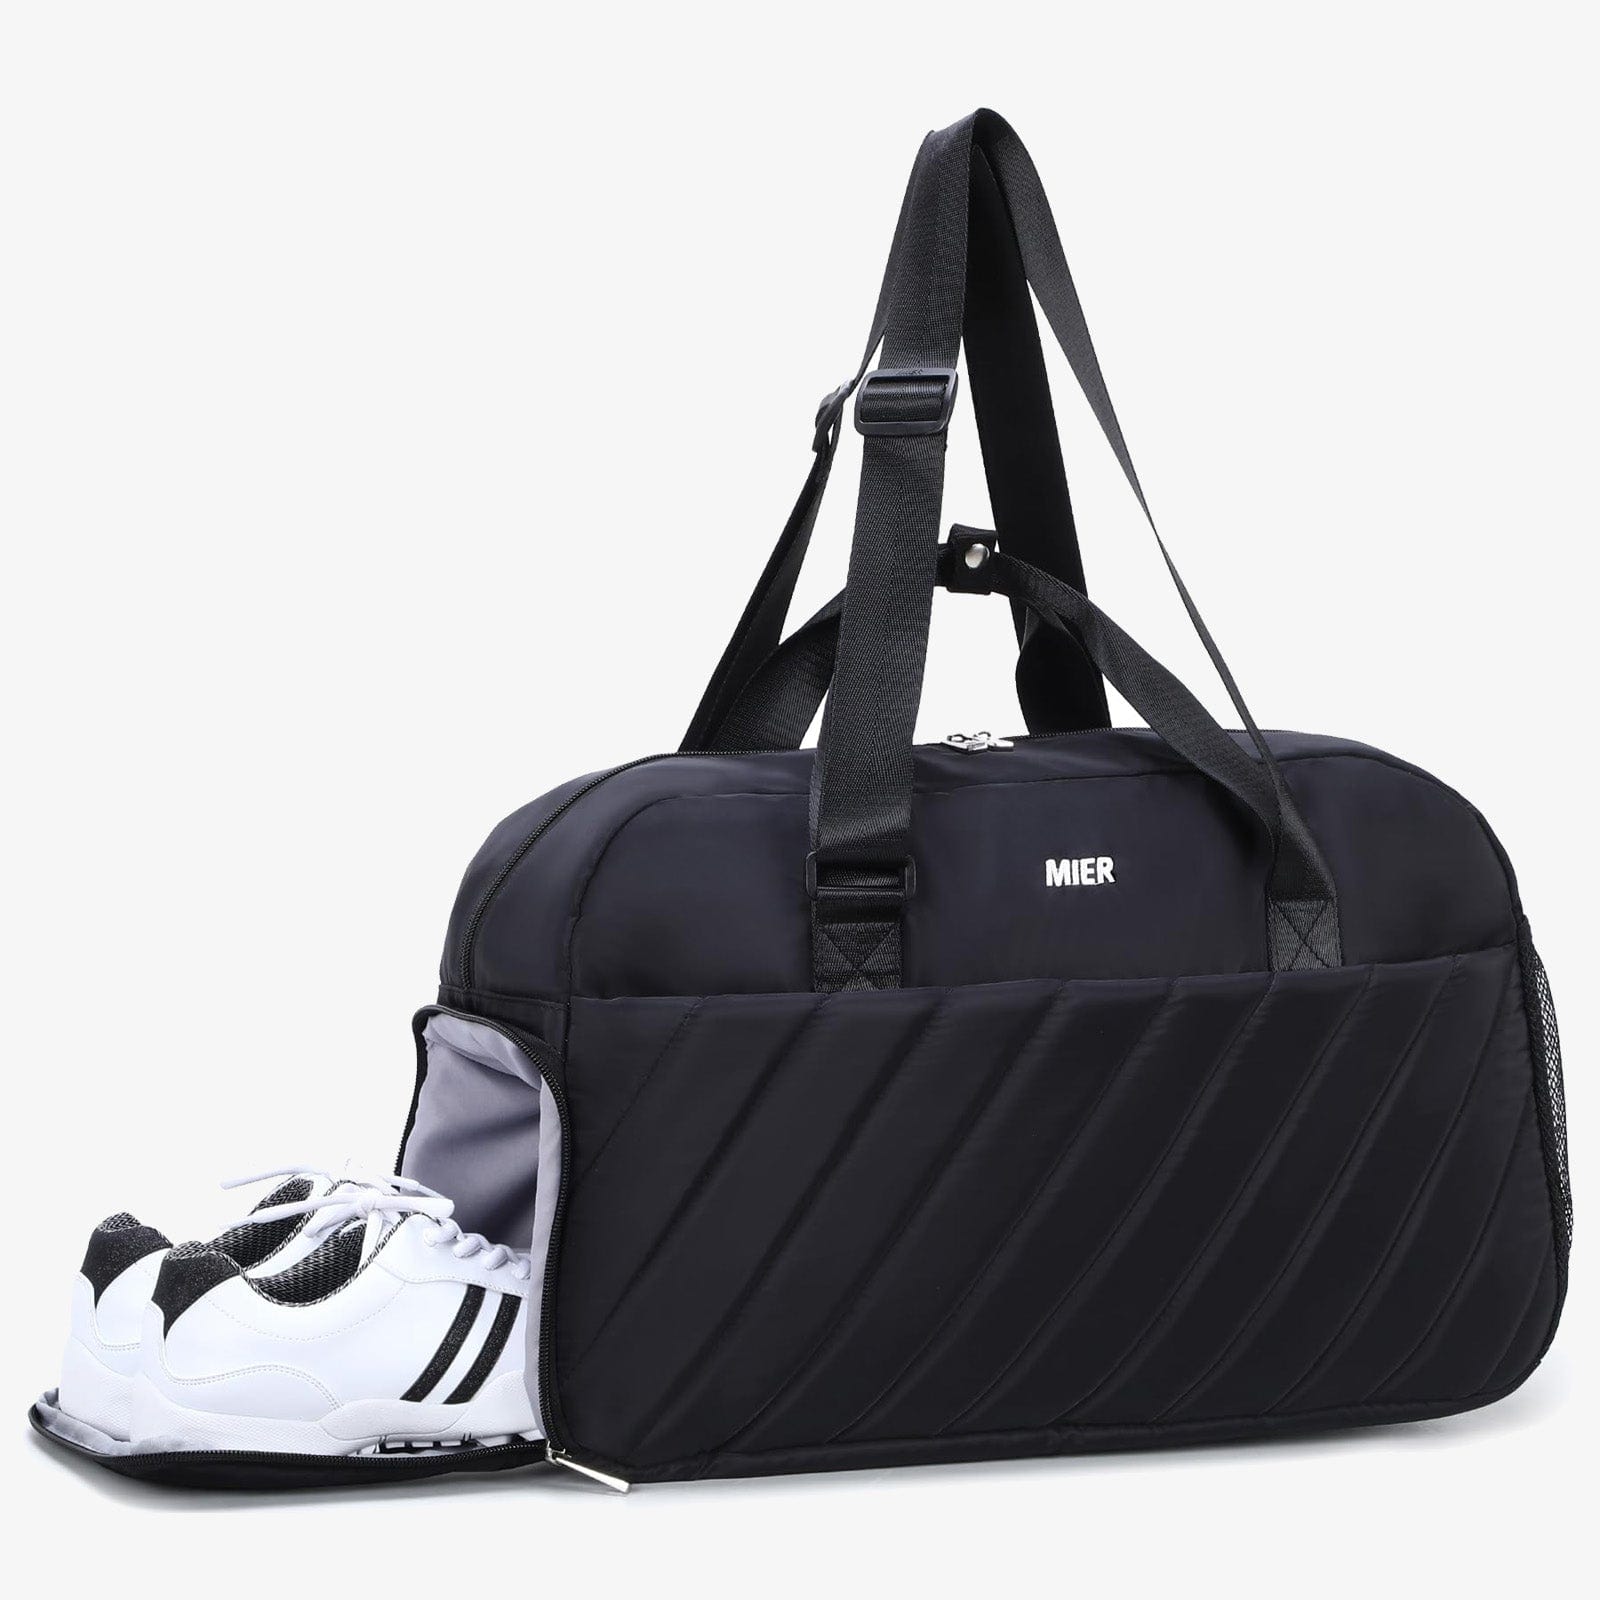 Travel Duffle Bags for Women Girls Quilted Sports Gym Duffel Gym Duffel Bag Black MIER